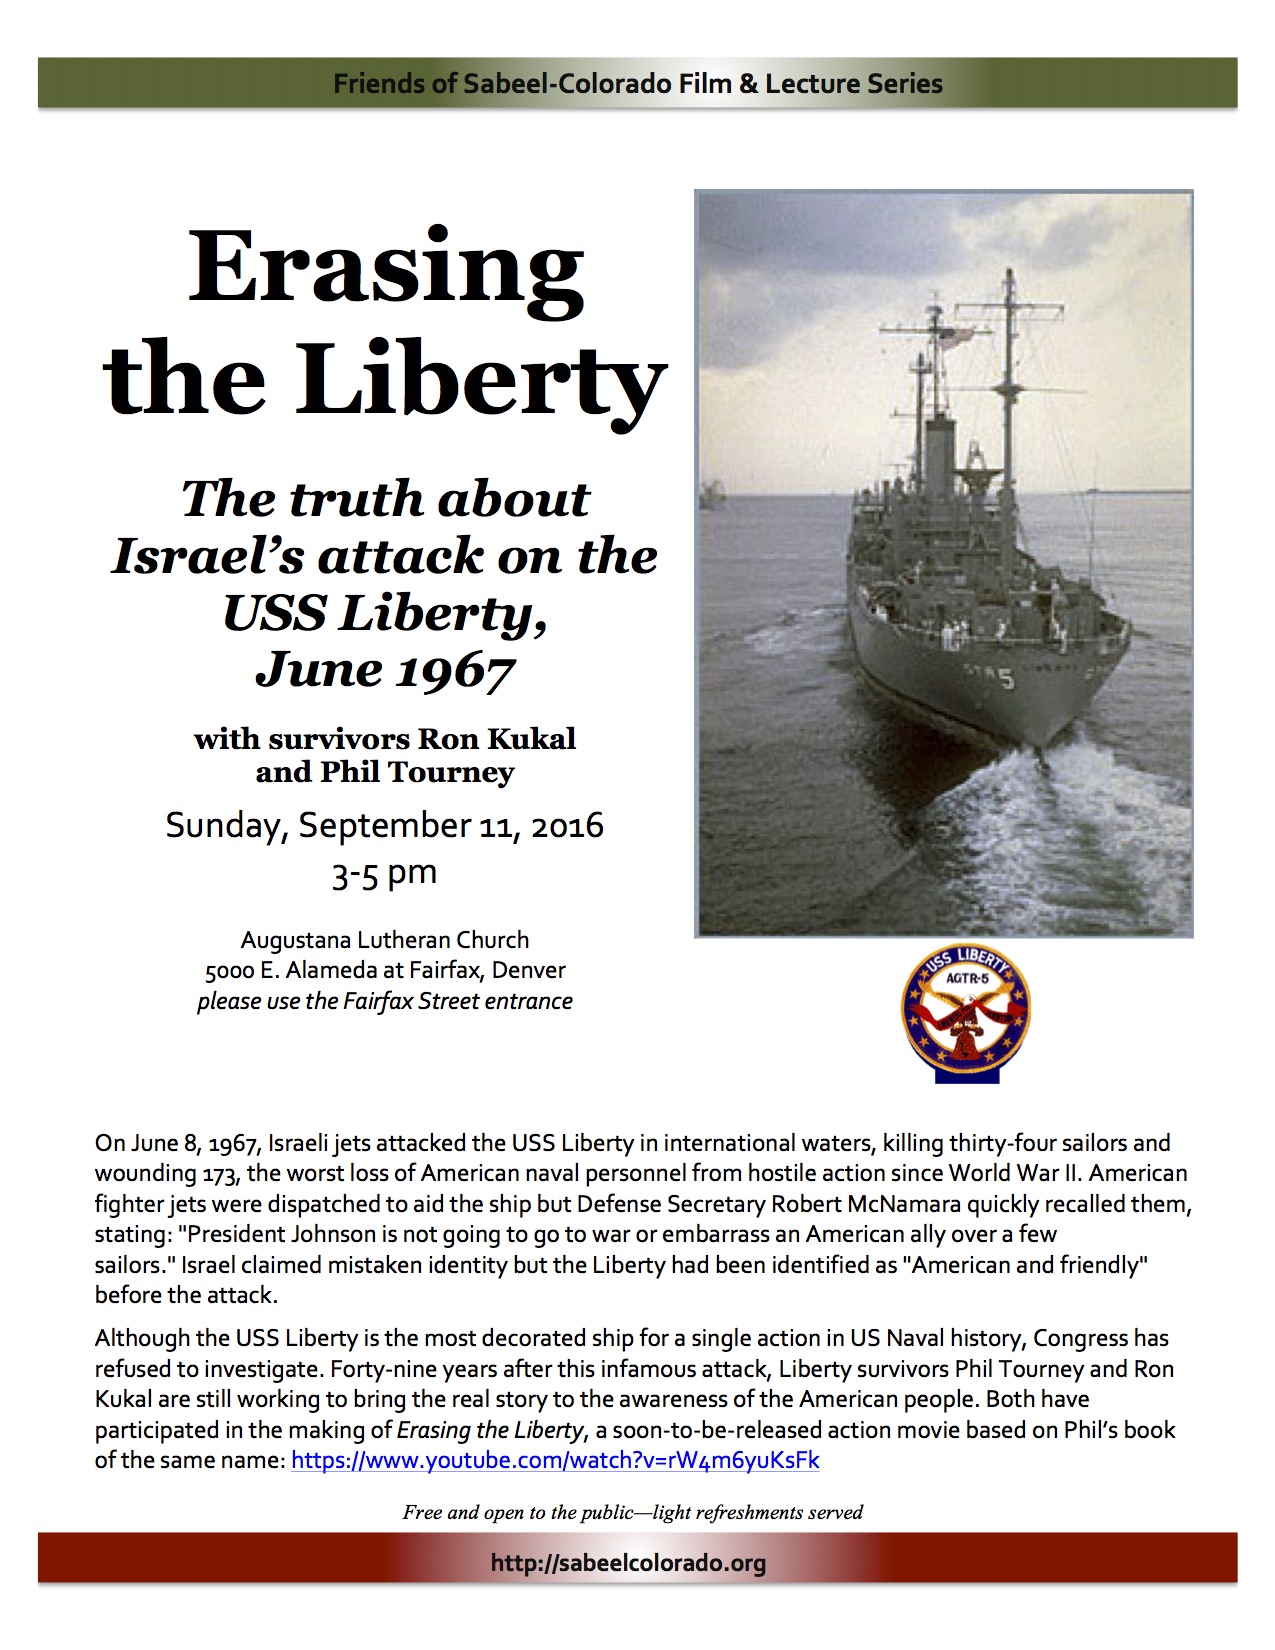 USSLiberty-3-2 copy